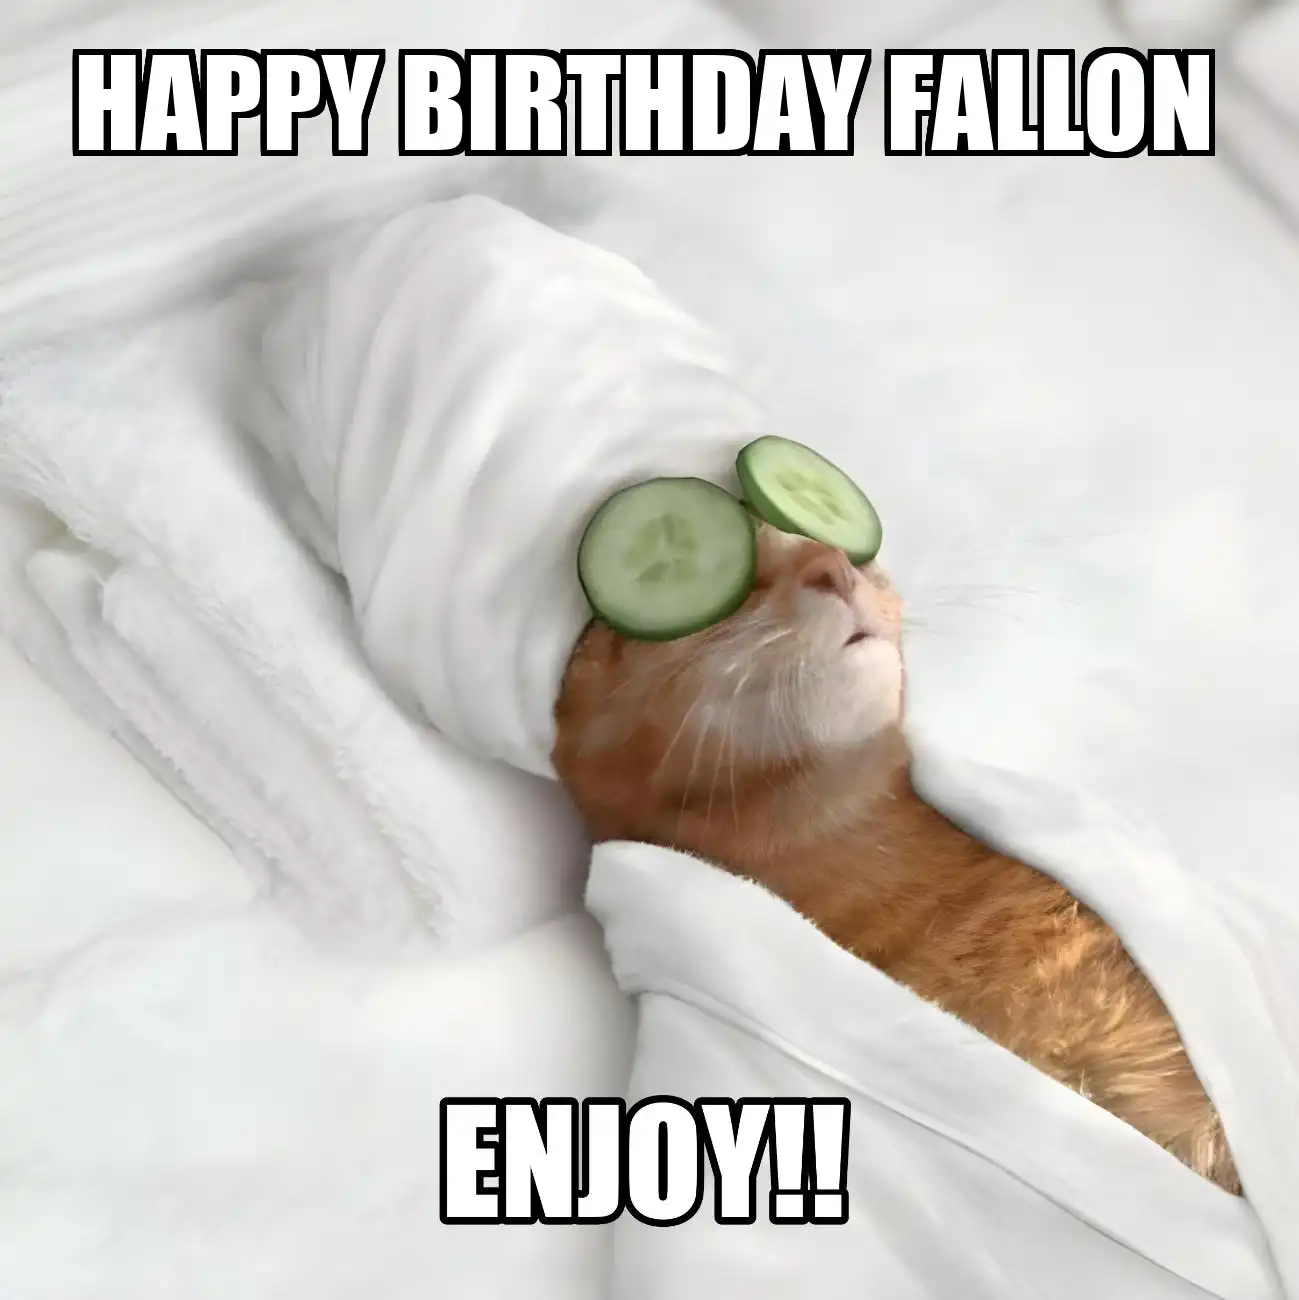 Happy Birthday Fallon Enjoy Cat Meme